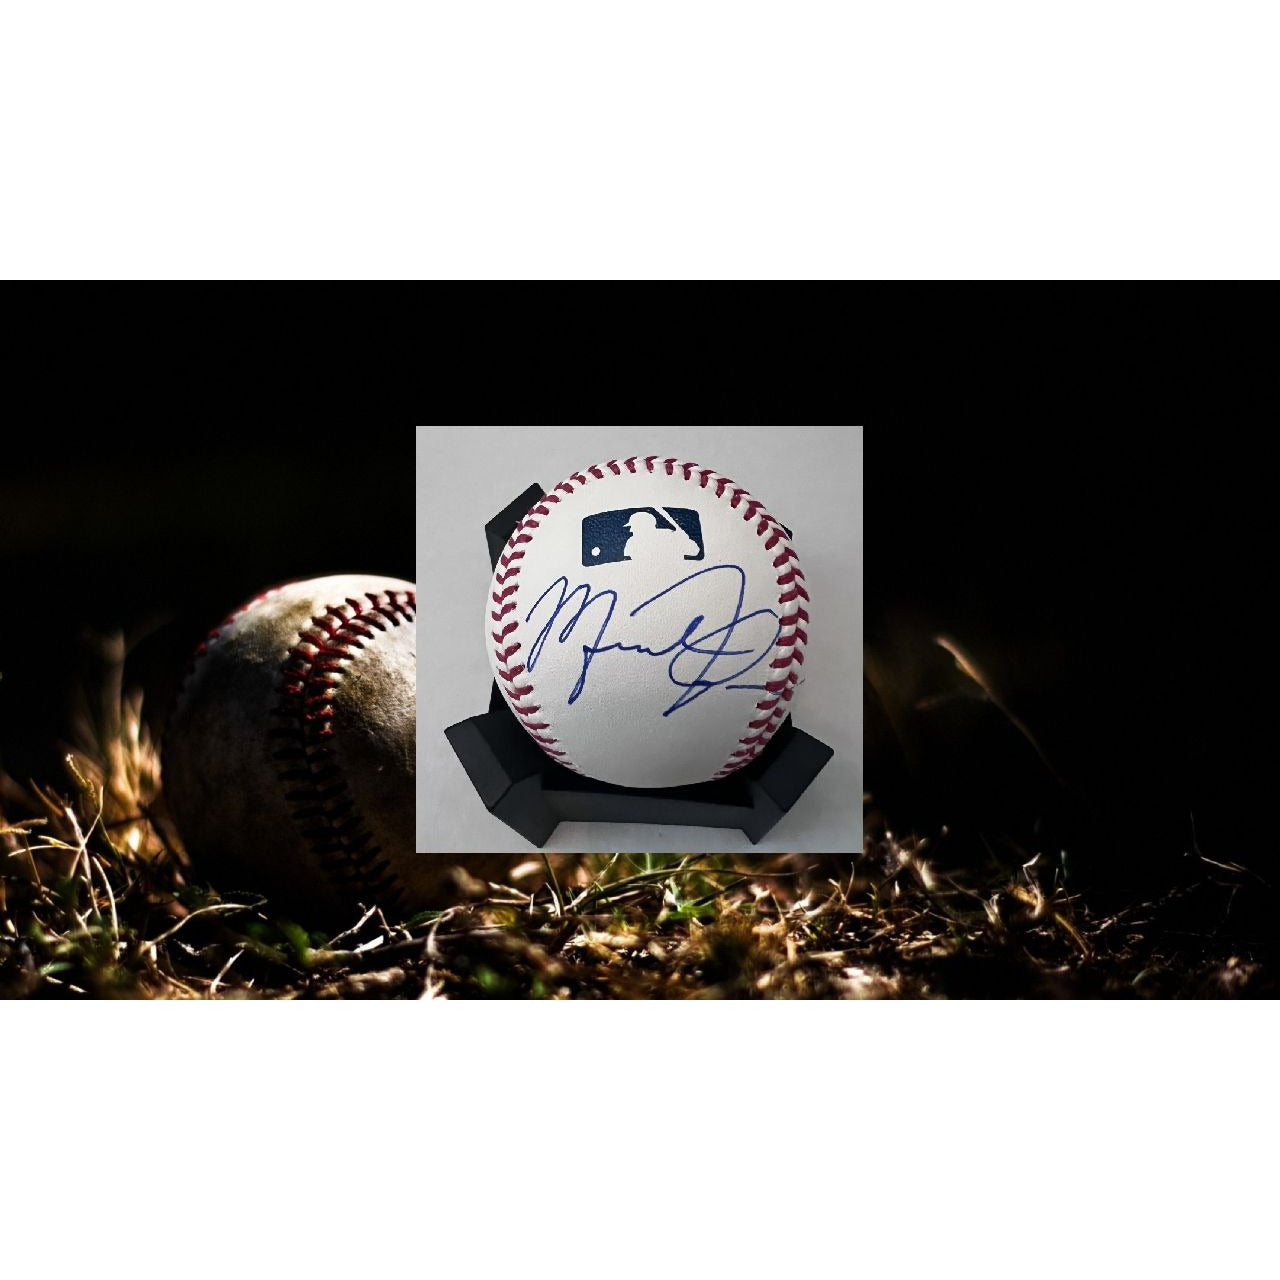 Michael Jordan official Rawlings Major League Baseball signed with proof